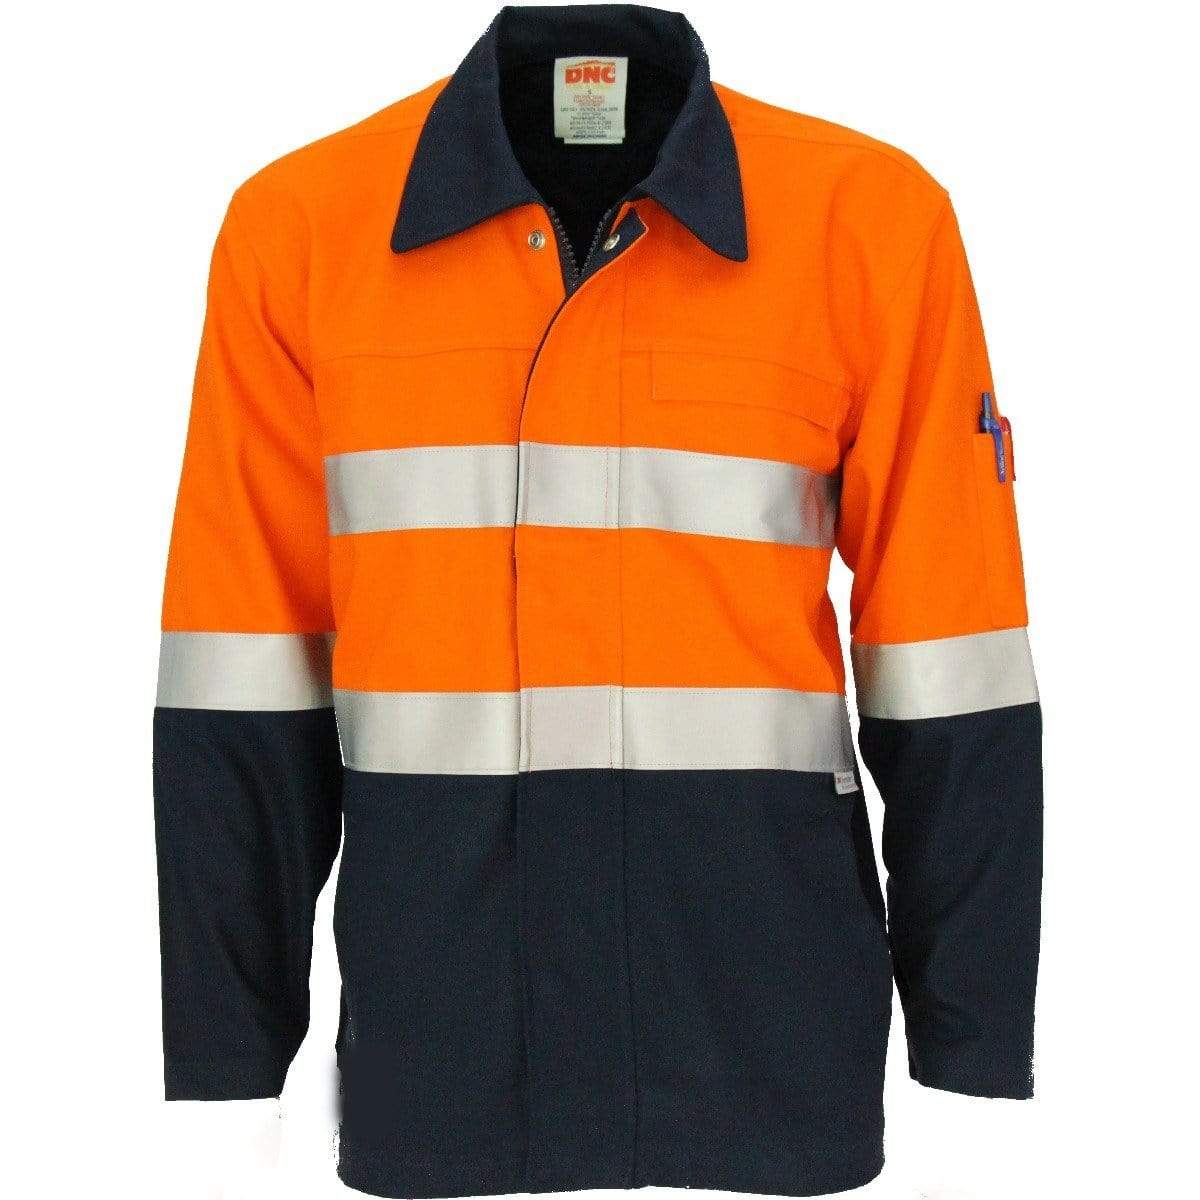 DNC Workwear Work Wear Orange/Navy / XS DNC WORKWEAR Patron Saint Flame Retardant Welder's Jacket 3458